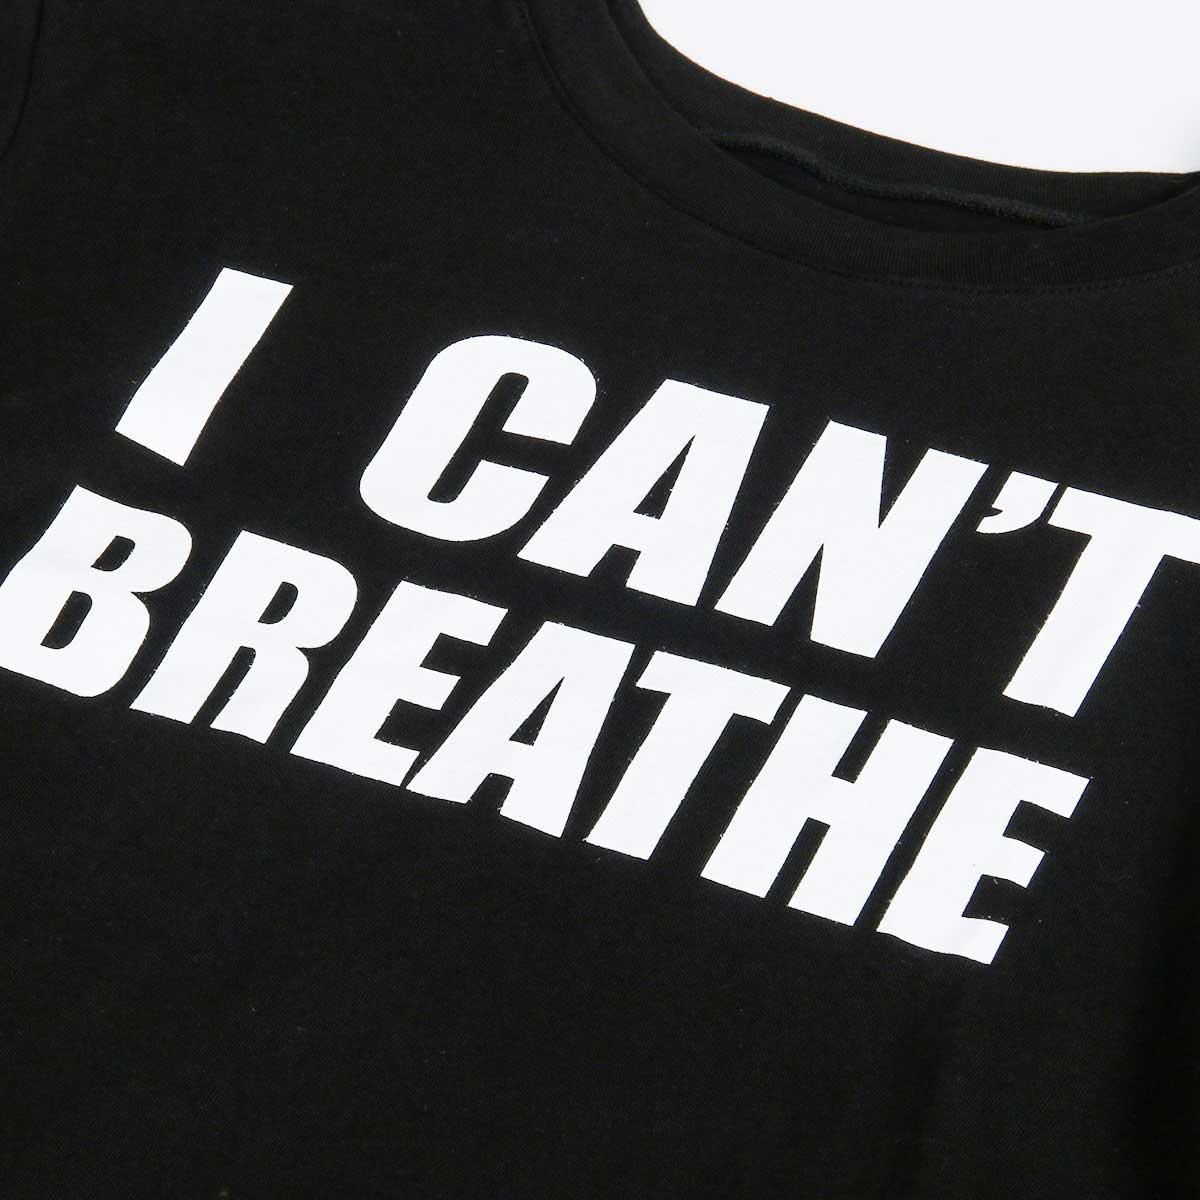 Ich kann nicht atmen Hemden protest T Shirts Schwarzer Leben Materie